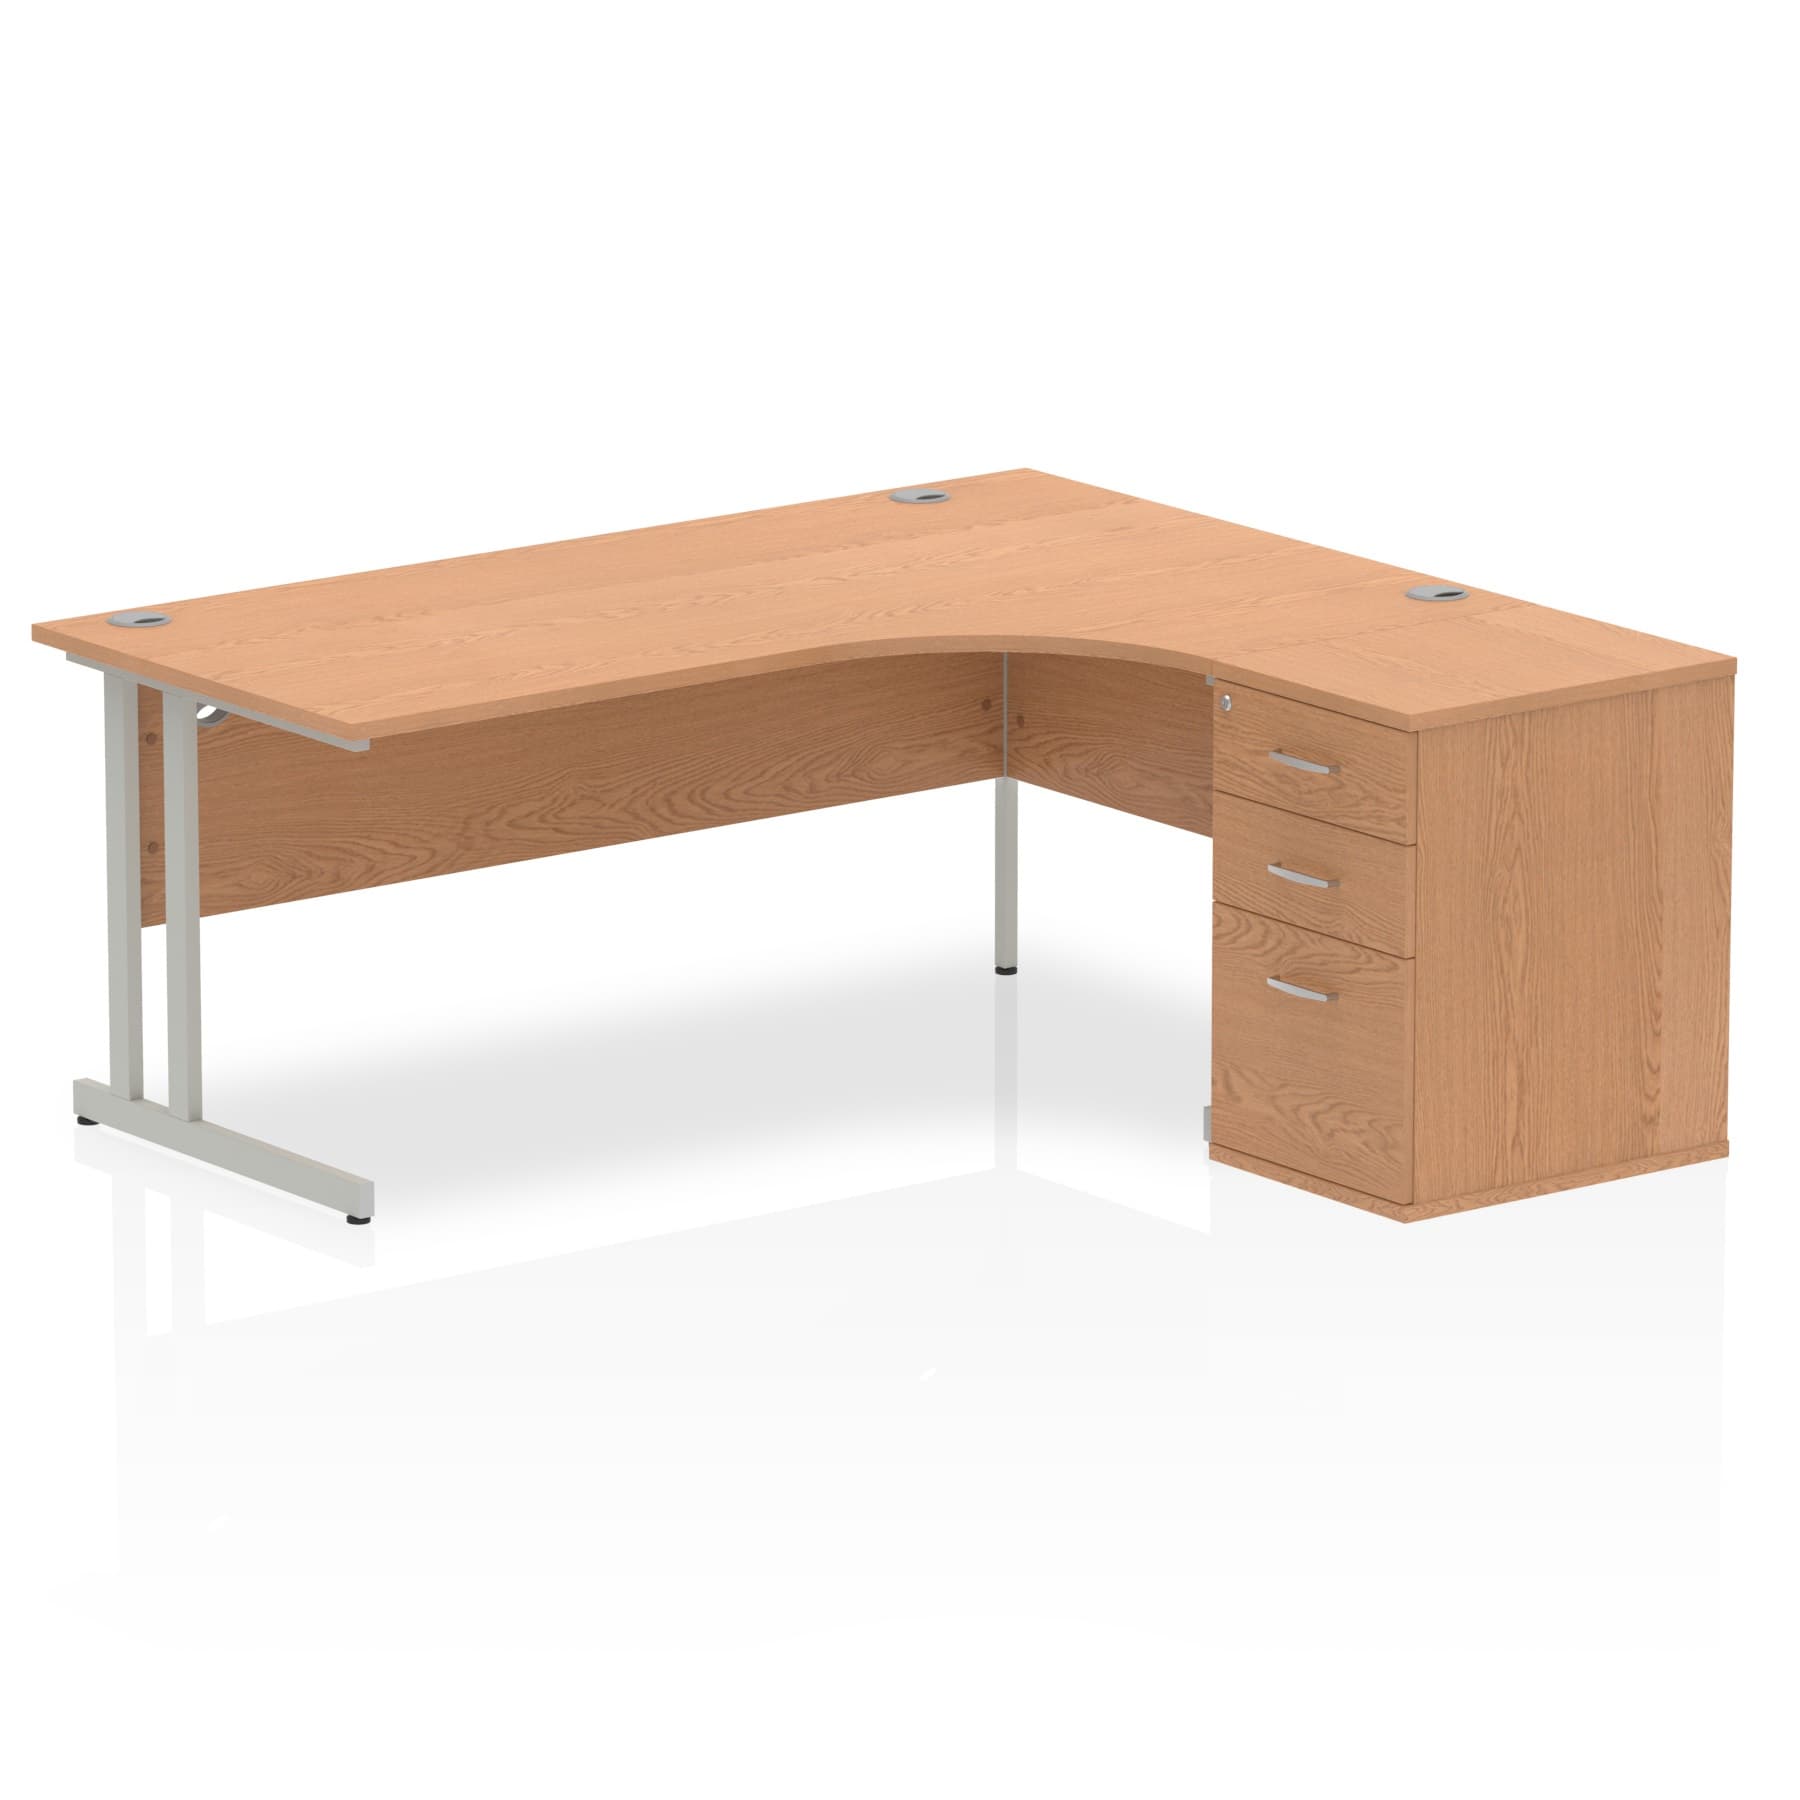 Sturdy 1800mm Freestanding Cantilever Desk with Pedestal | Heat & Weather Resistant Melamine Finish | Dynasty